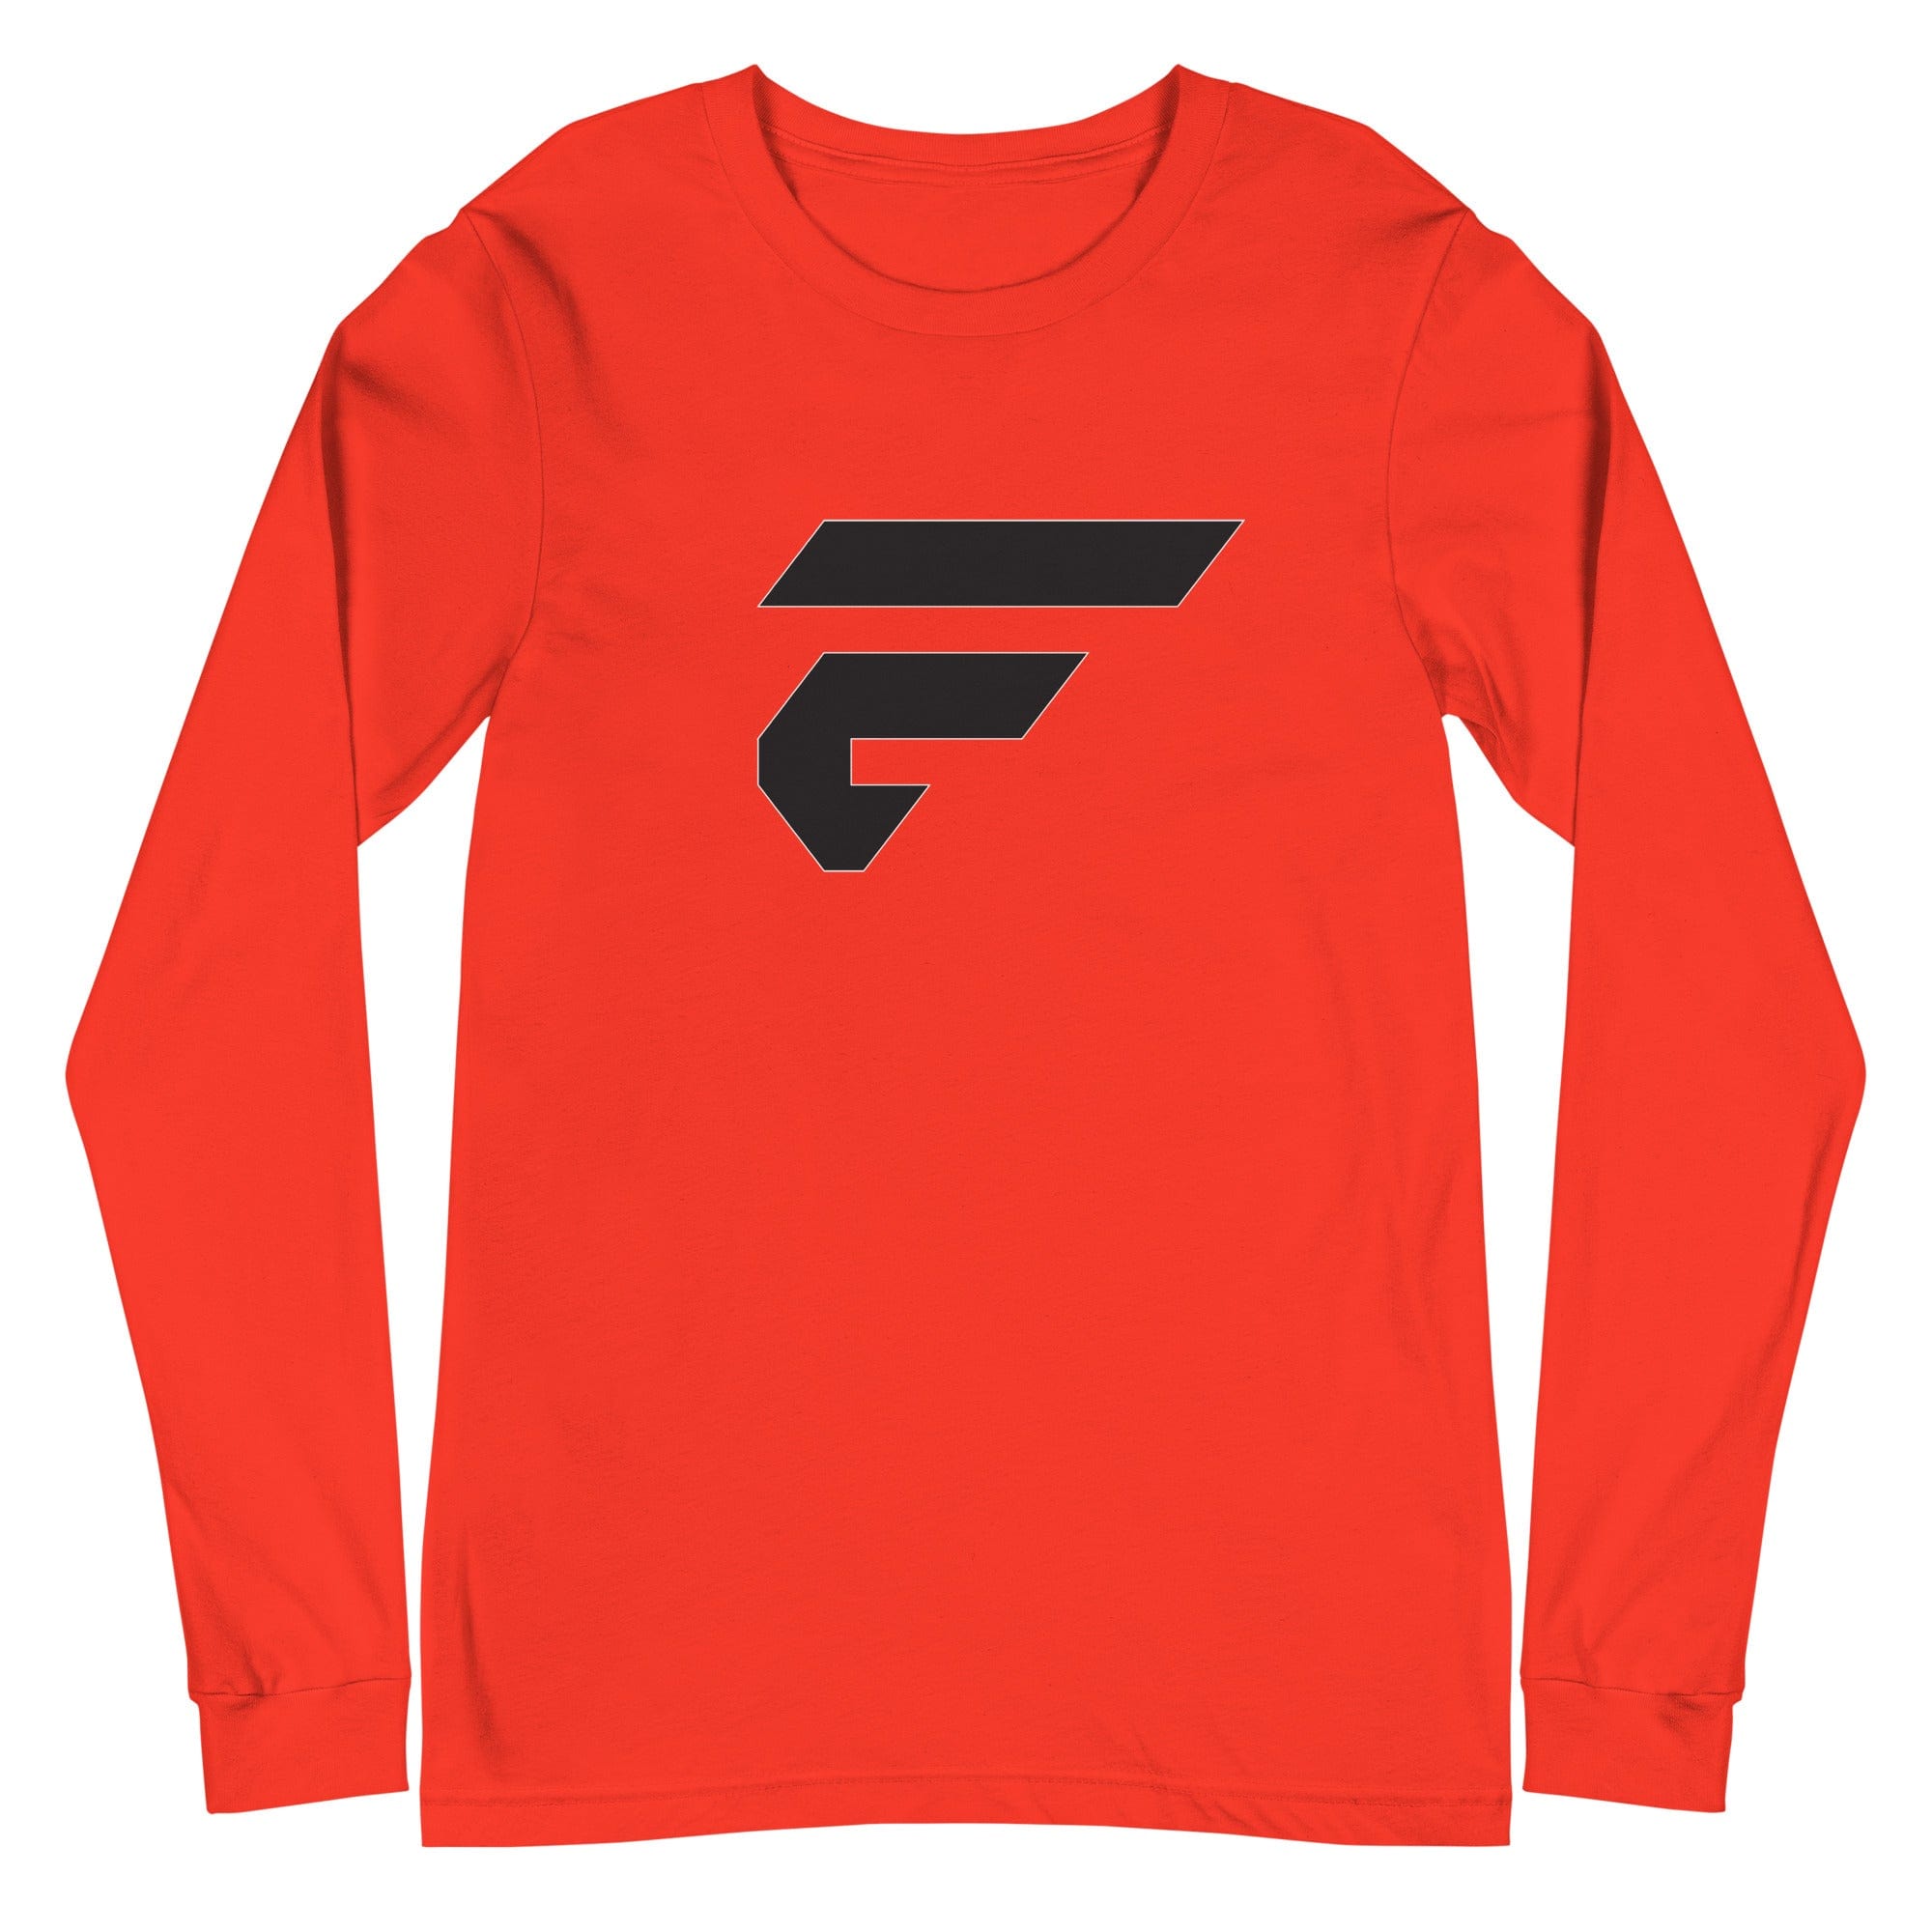 Orange unisex cotton longsleeve shirt with Fire Cornhole F logo in black